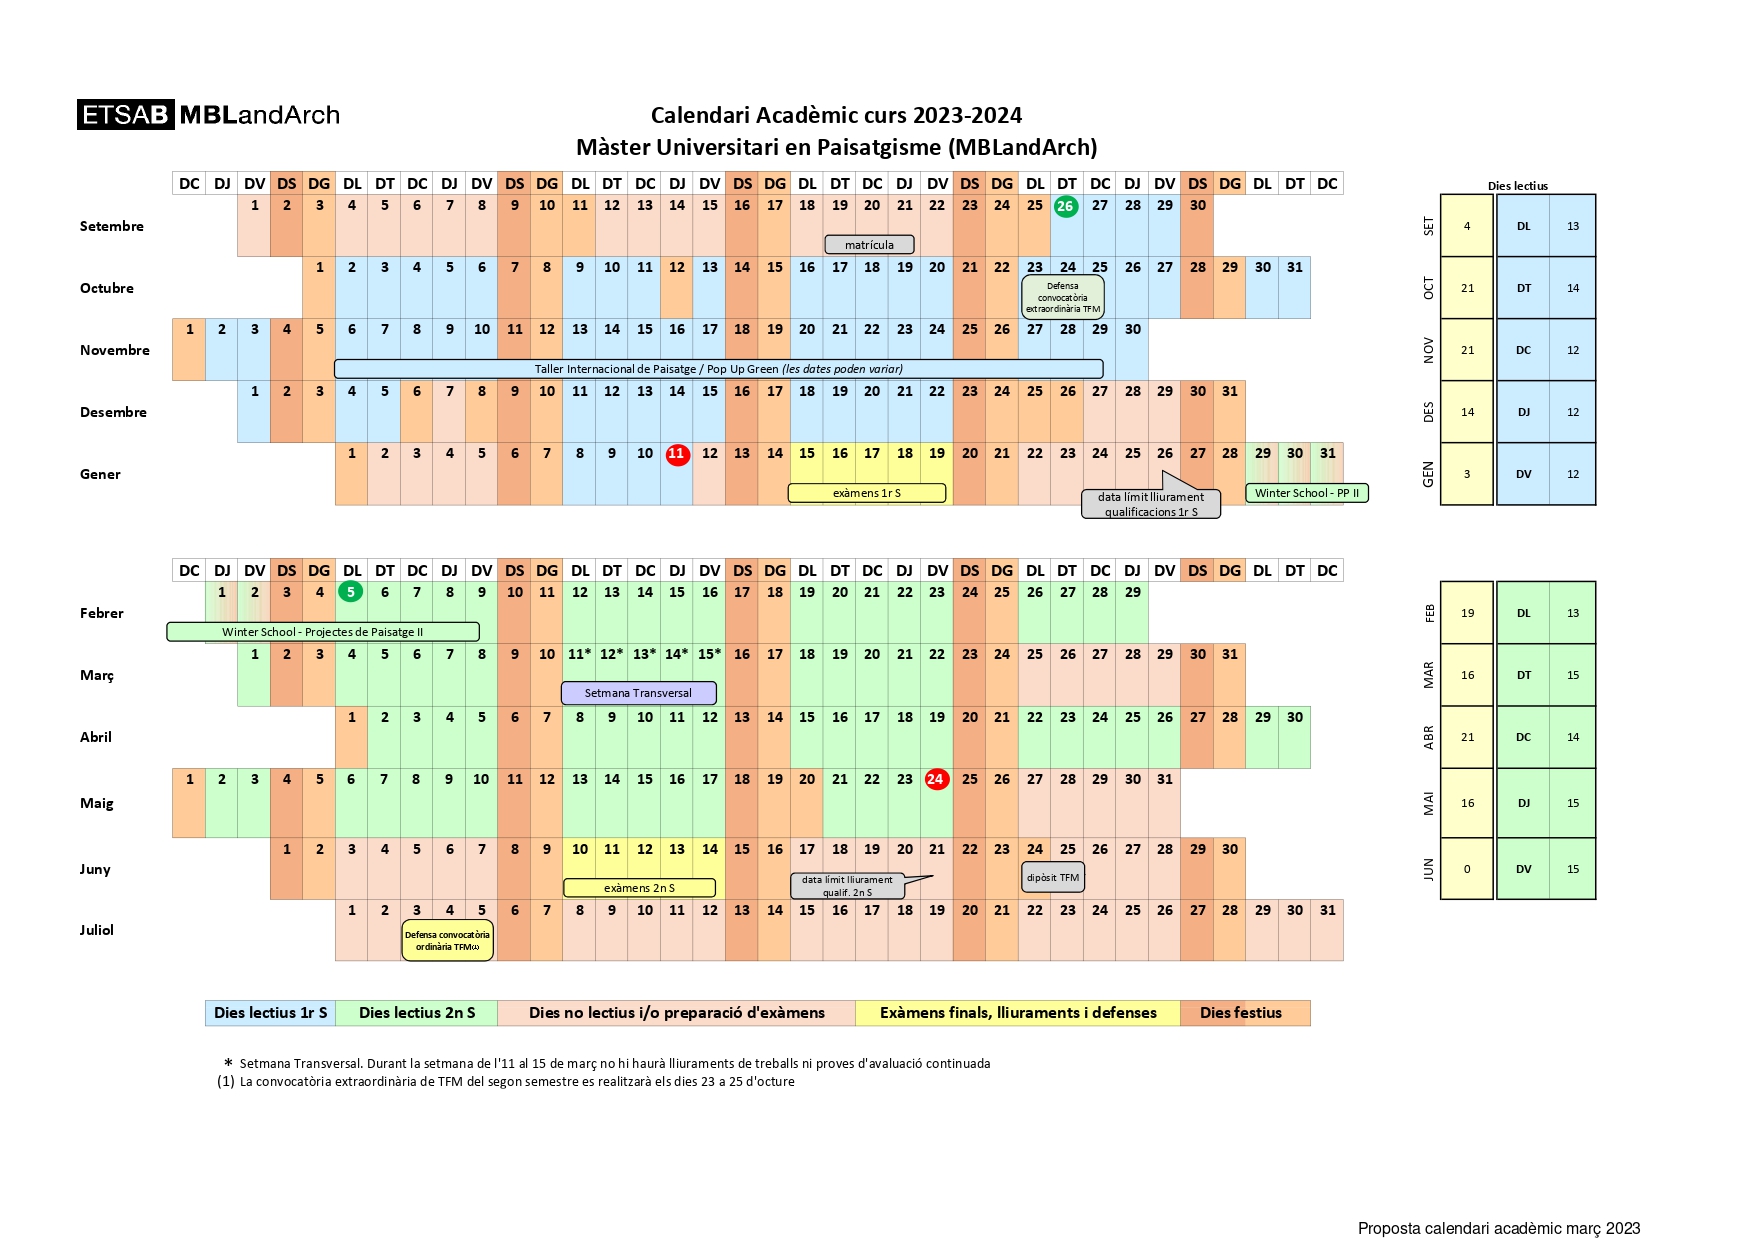 calendari academic mblandarch 2022-23 imatge